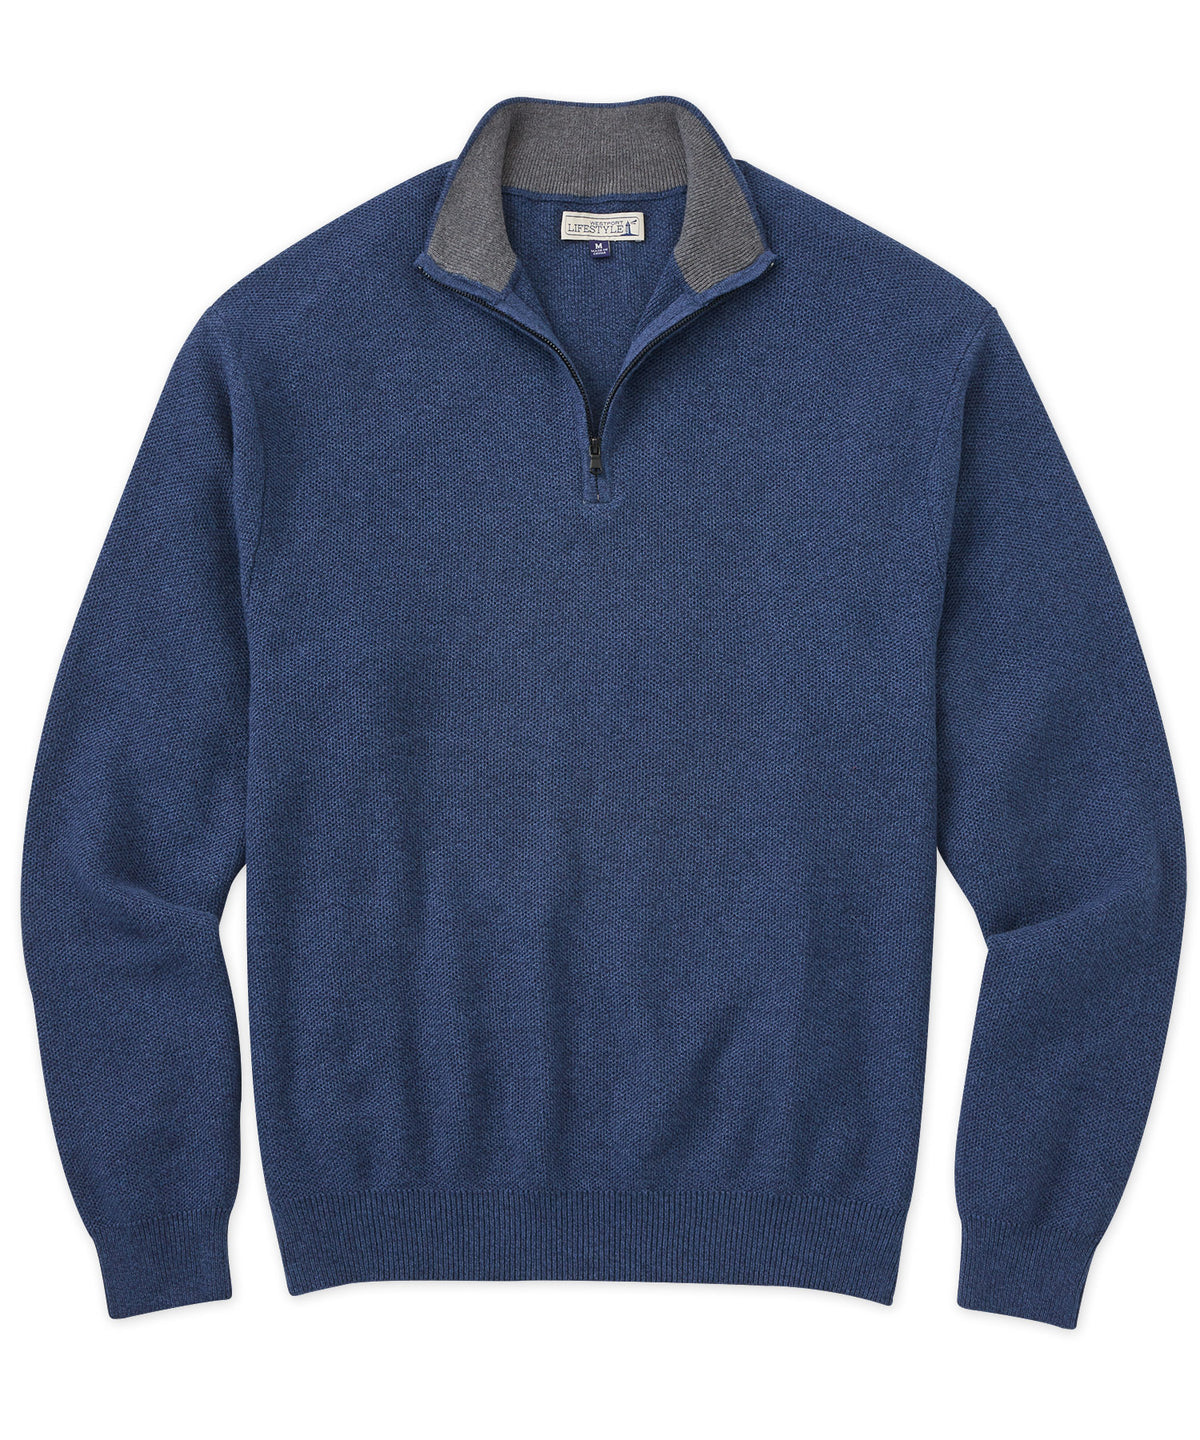 Westport Lifestyle Cotton Cashmere Quarter-Zip Pullover, Men's Big & Tall